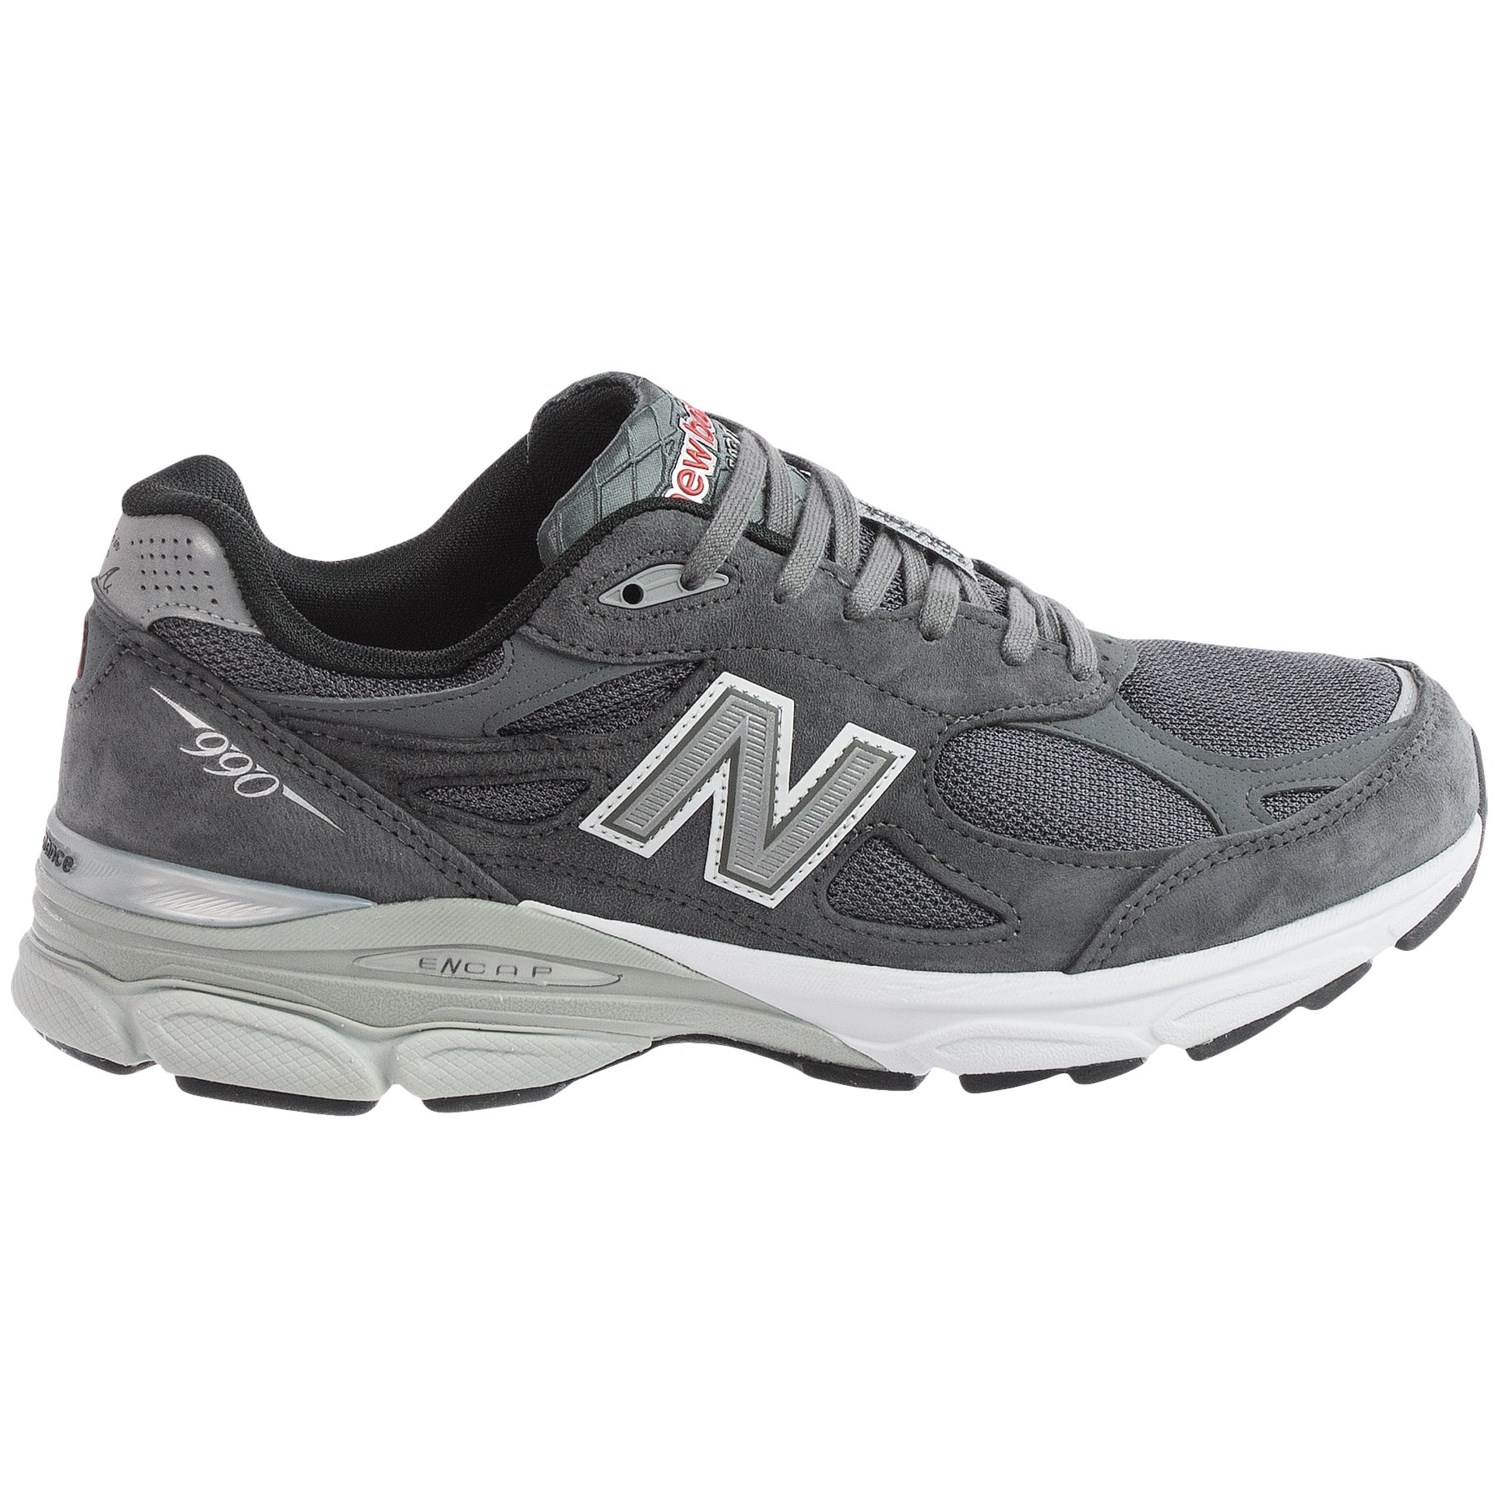 New Balance 990v3 Running Shoes (For Men) Save 68